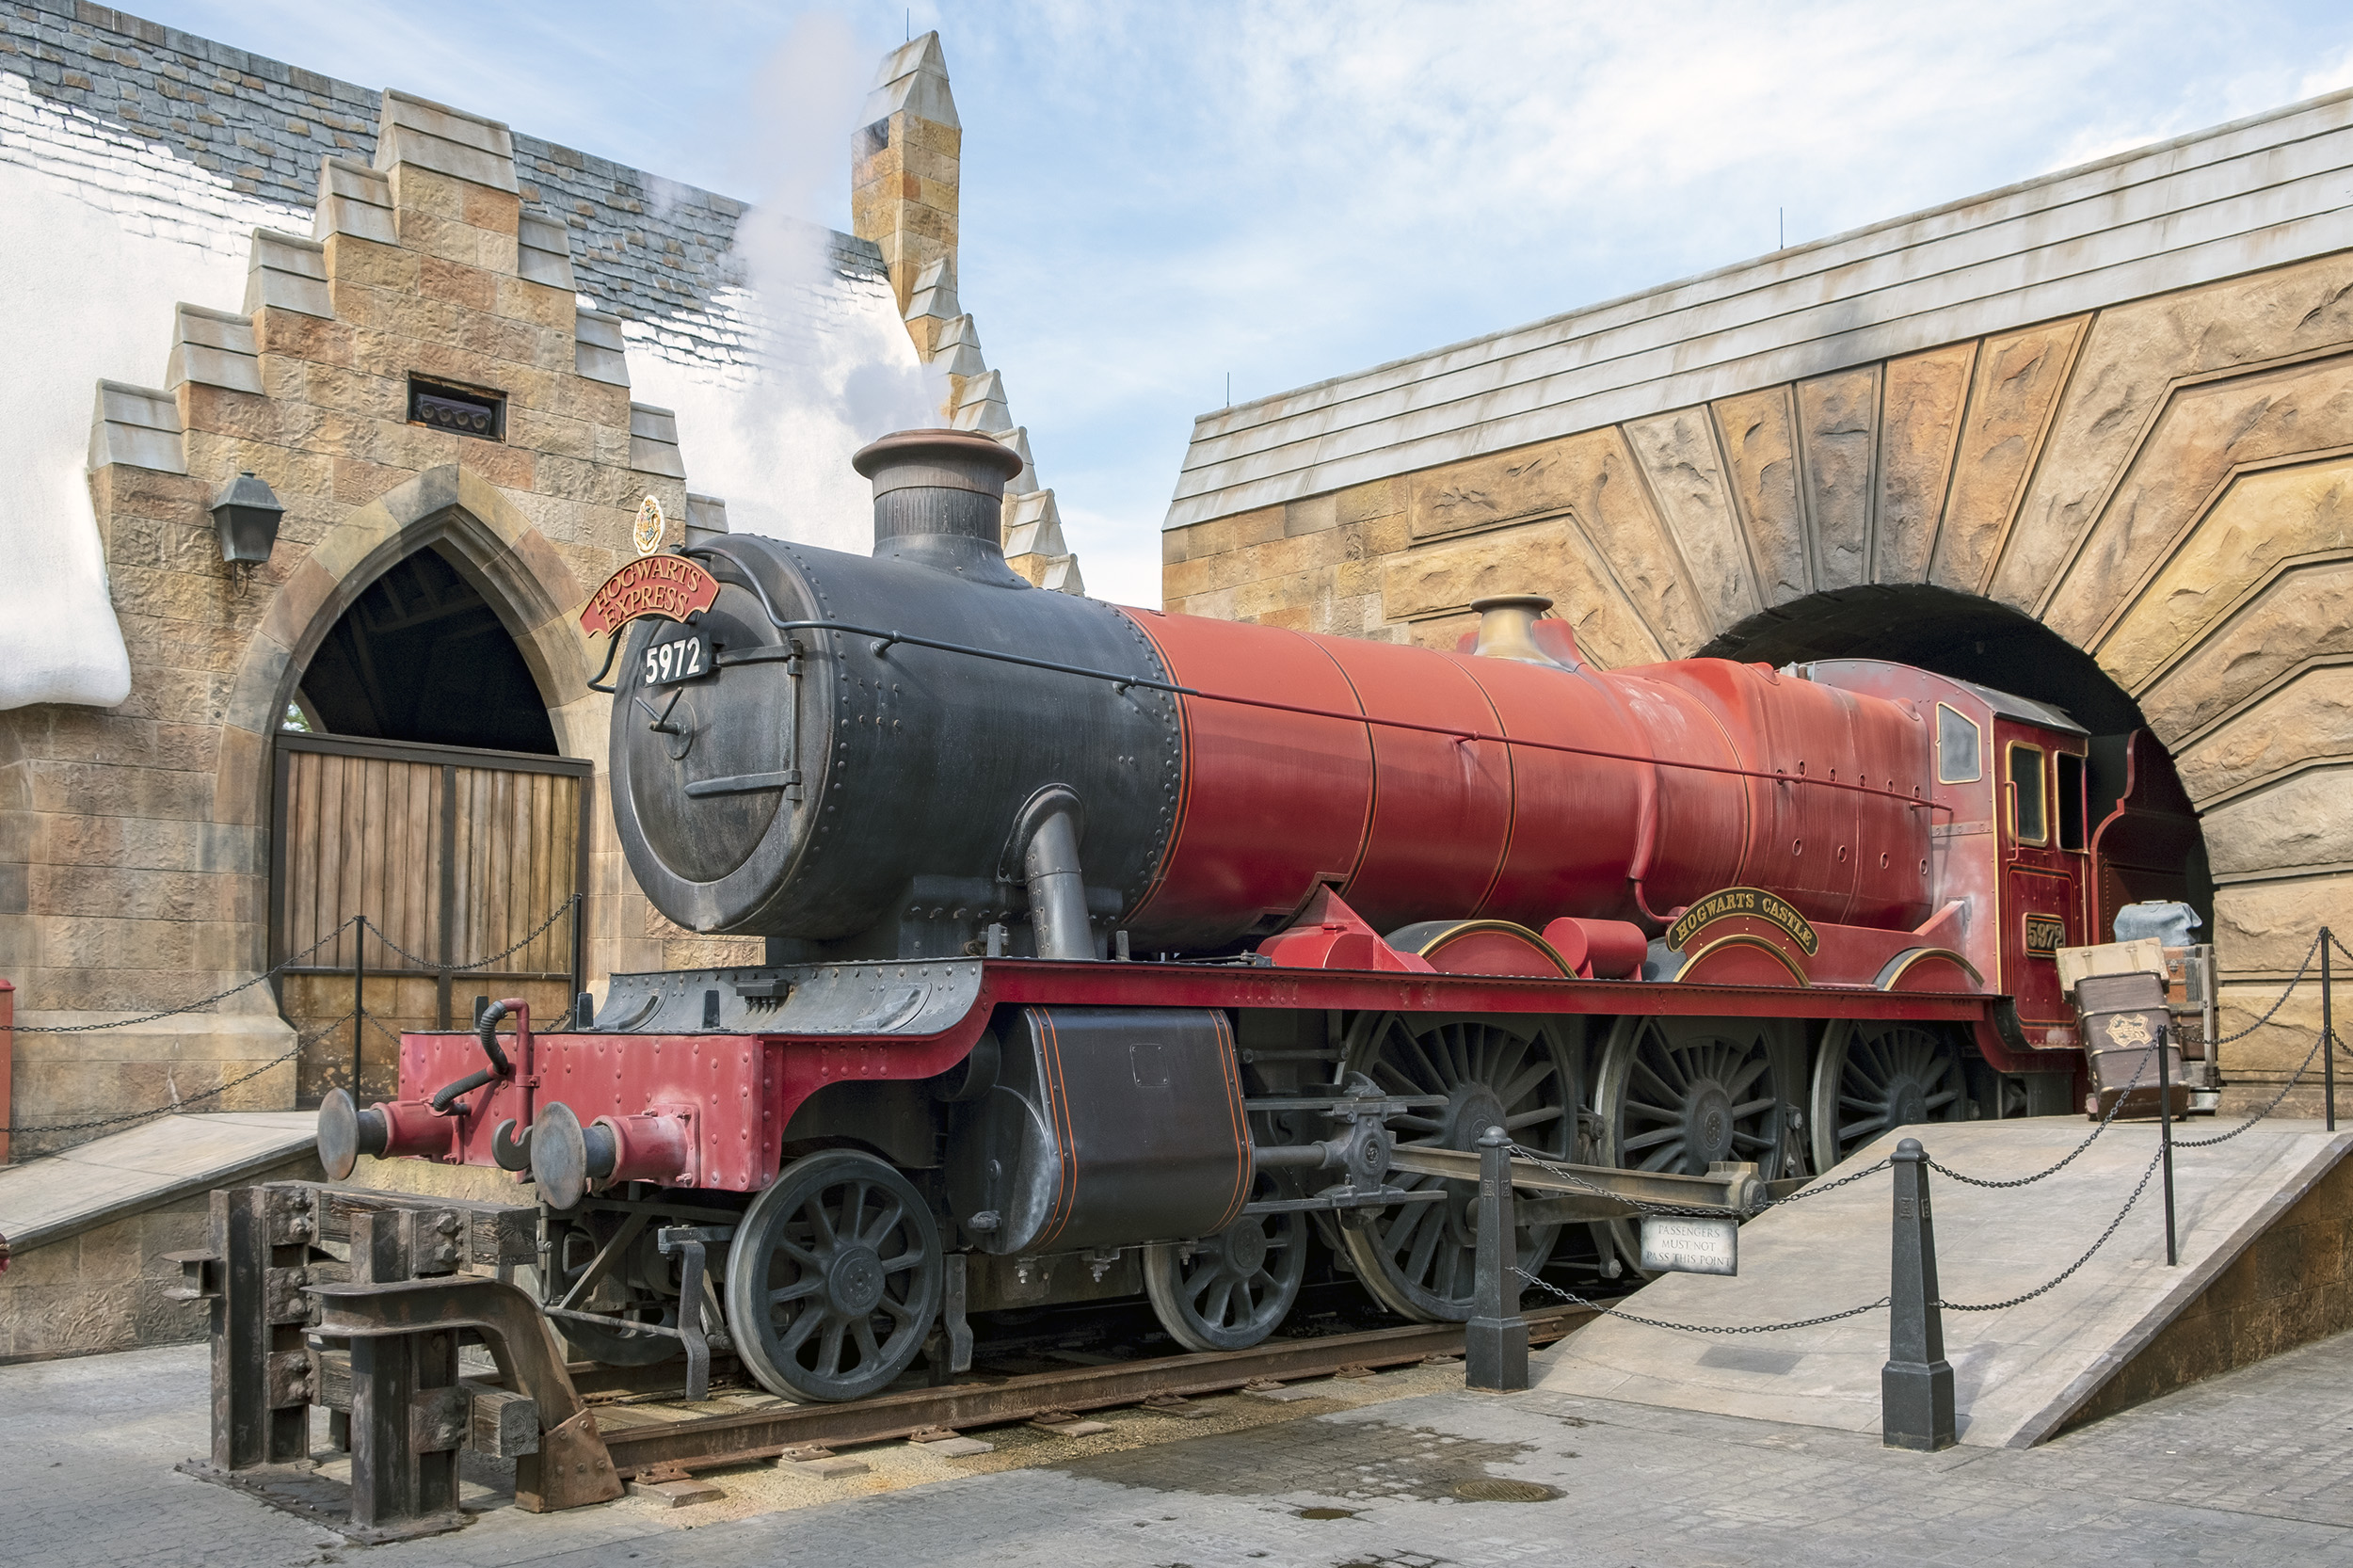 Hogwarts Express Hogsmeade Village The Wizarding World of Harry Potter Orlando